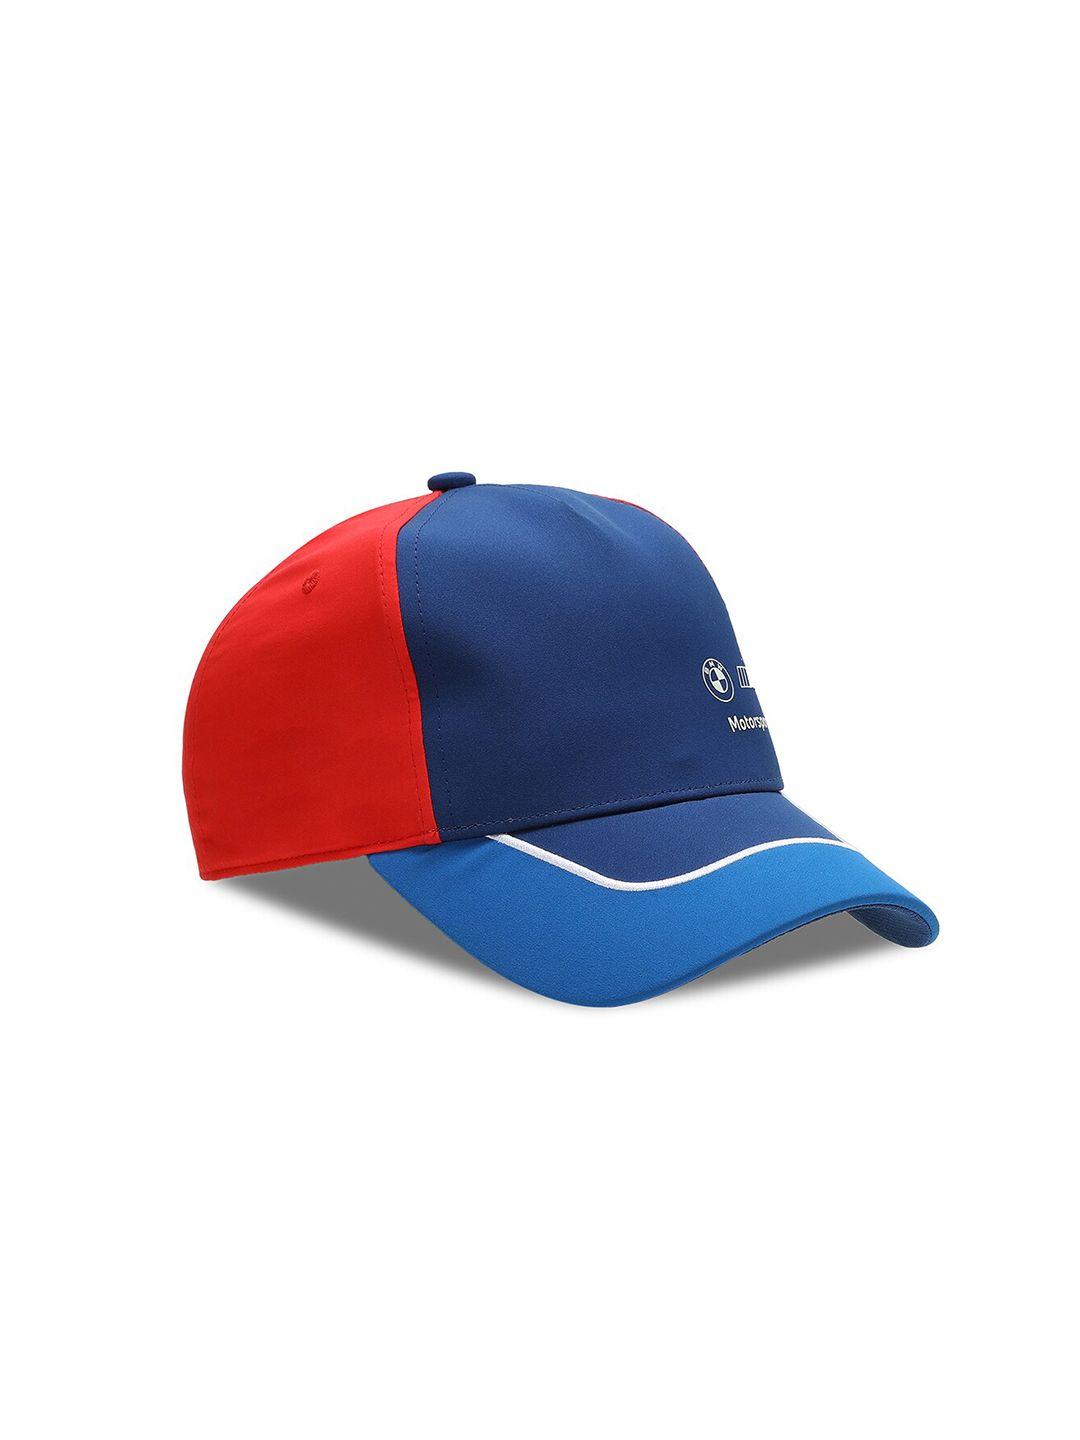 puma motorsport colourblocked bmw m baseball cap